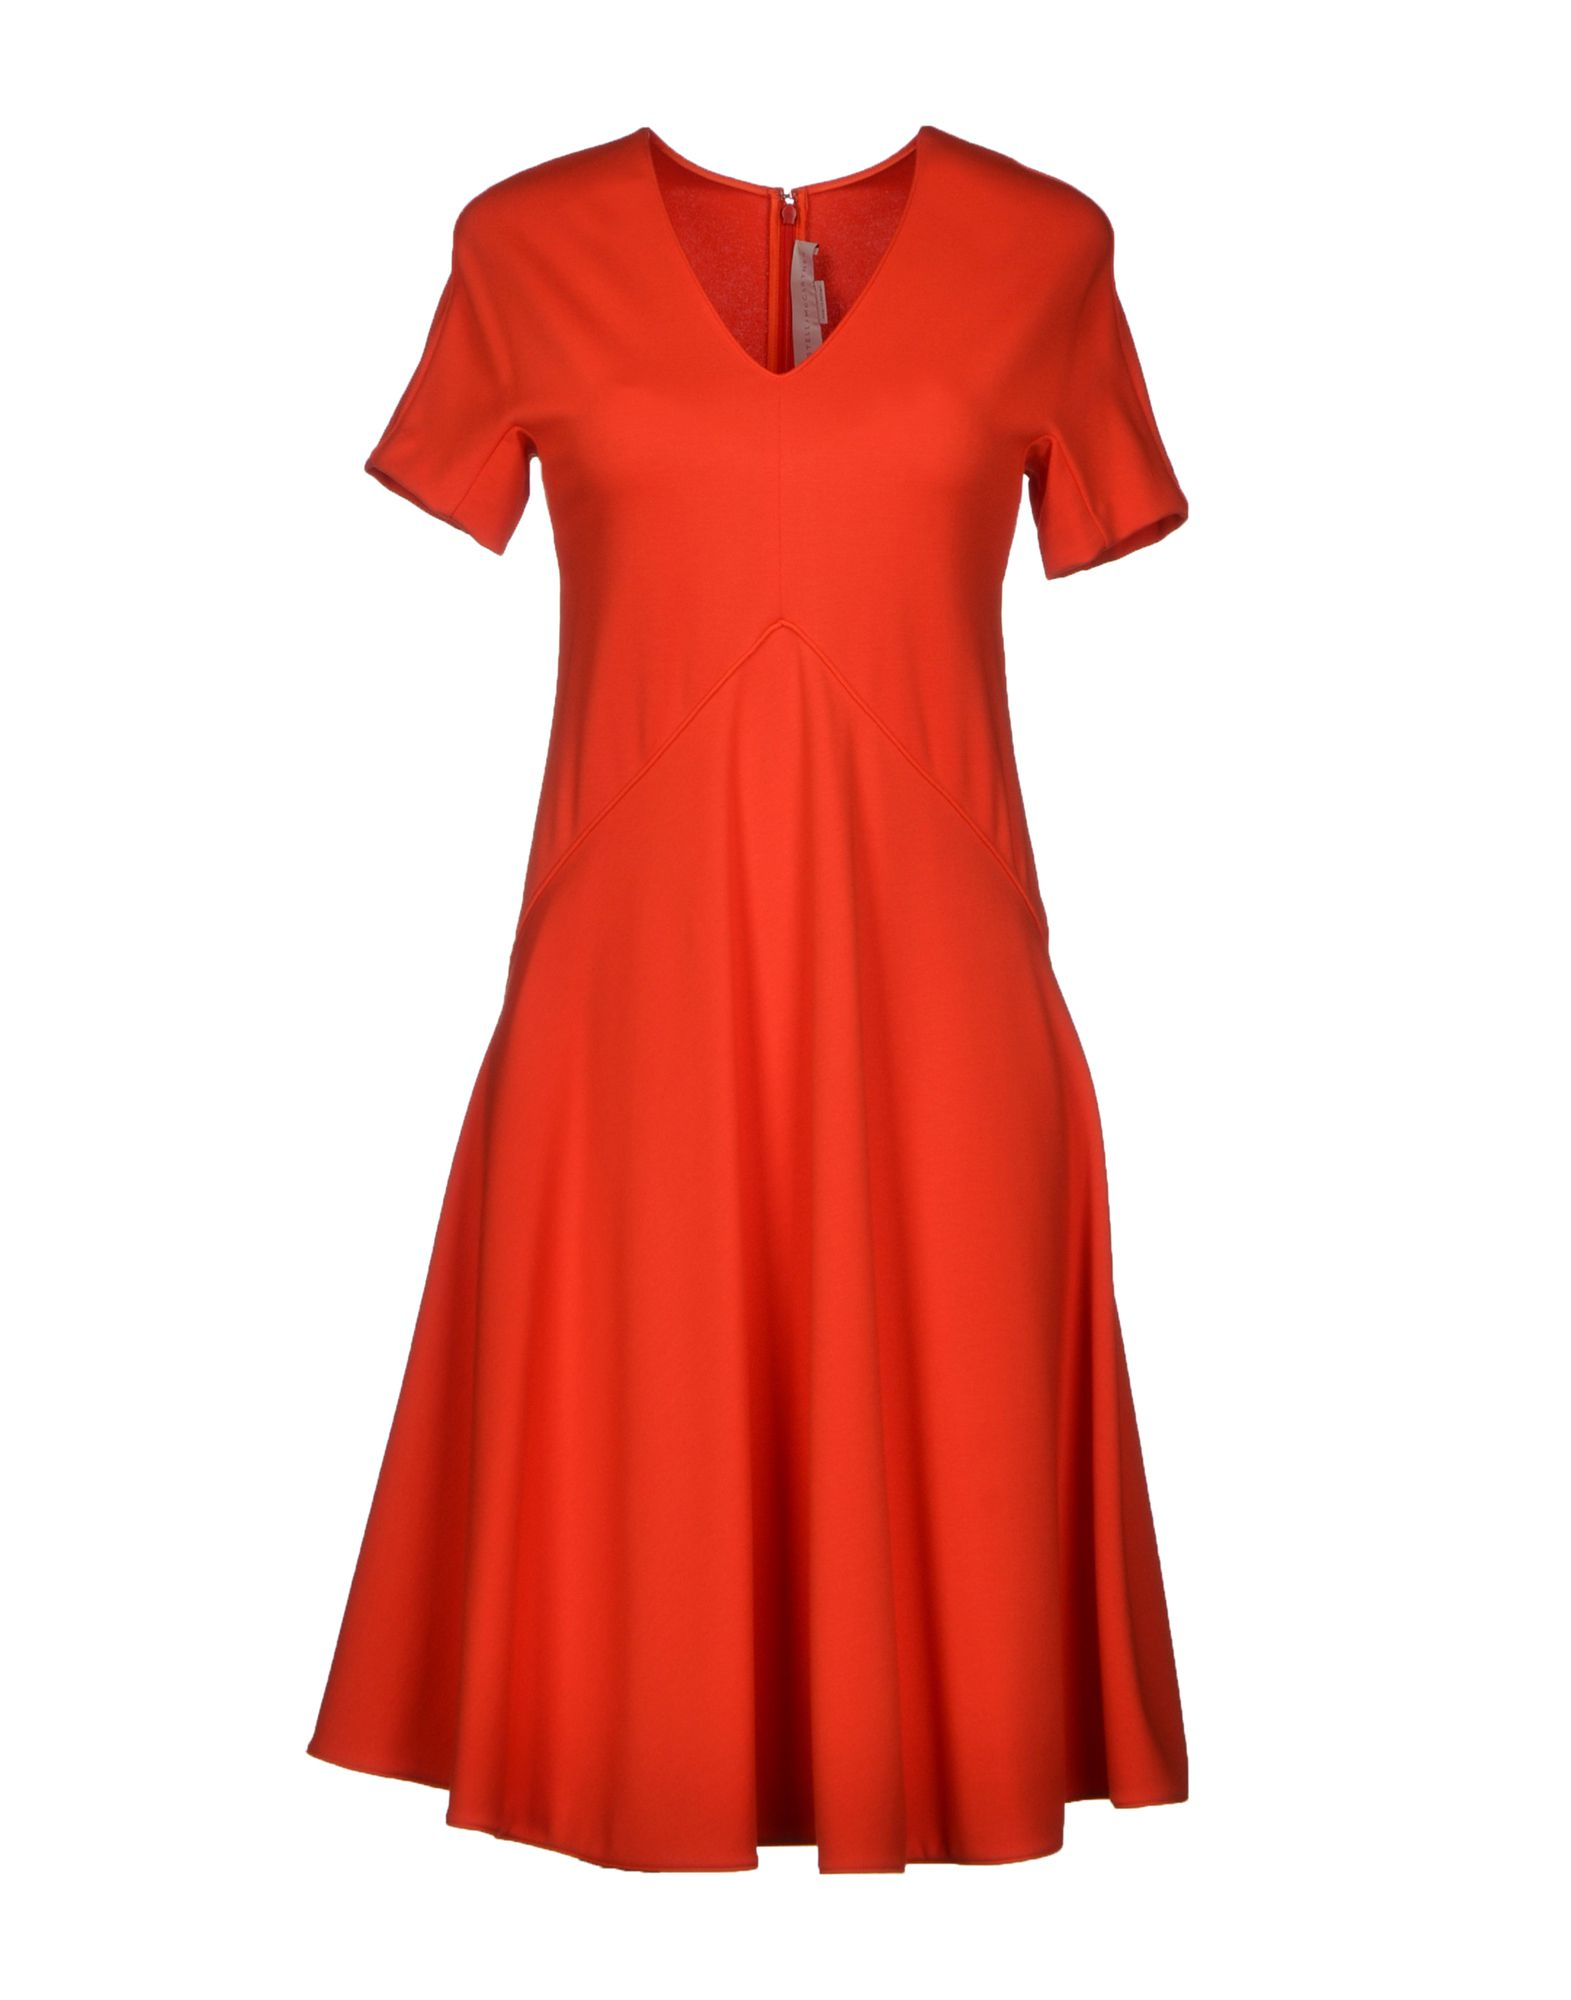 Stella mccartney Knee-length Dress in Red | Lyst